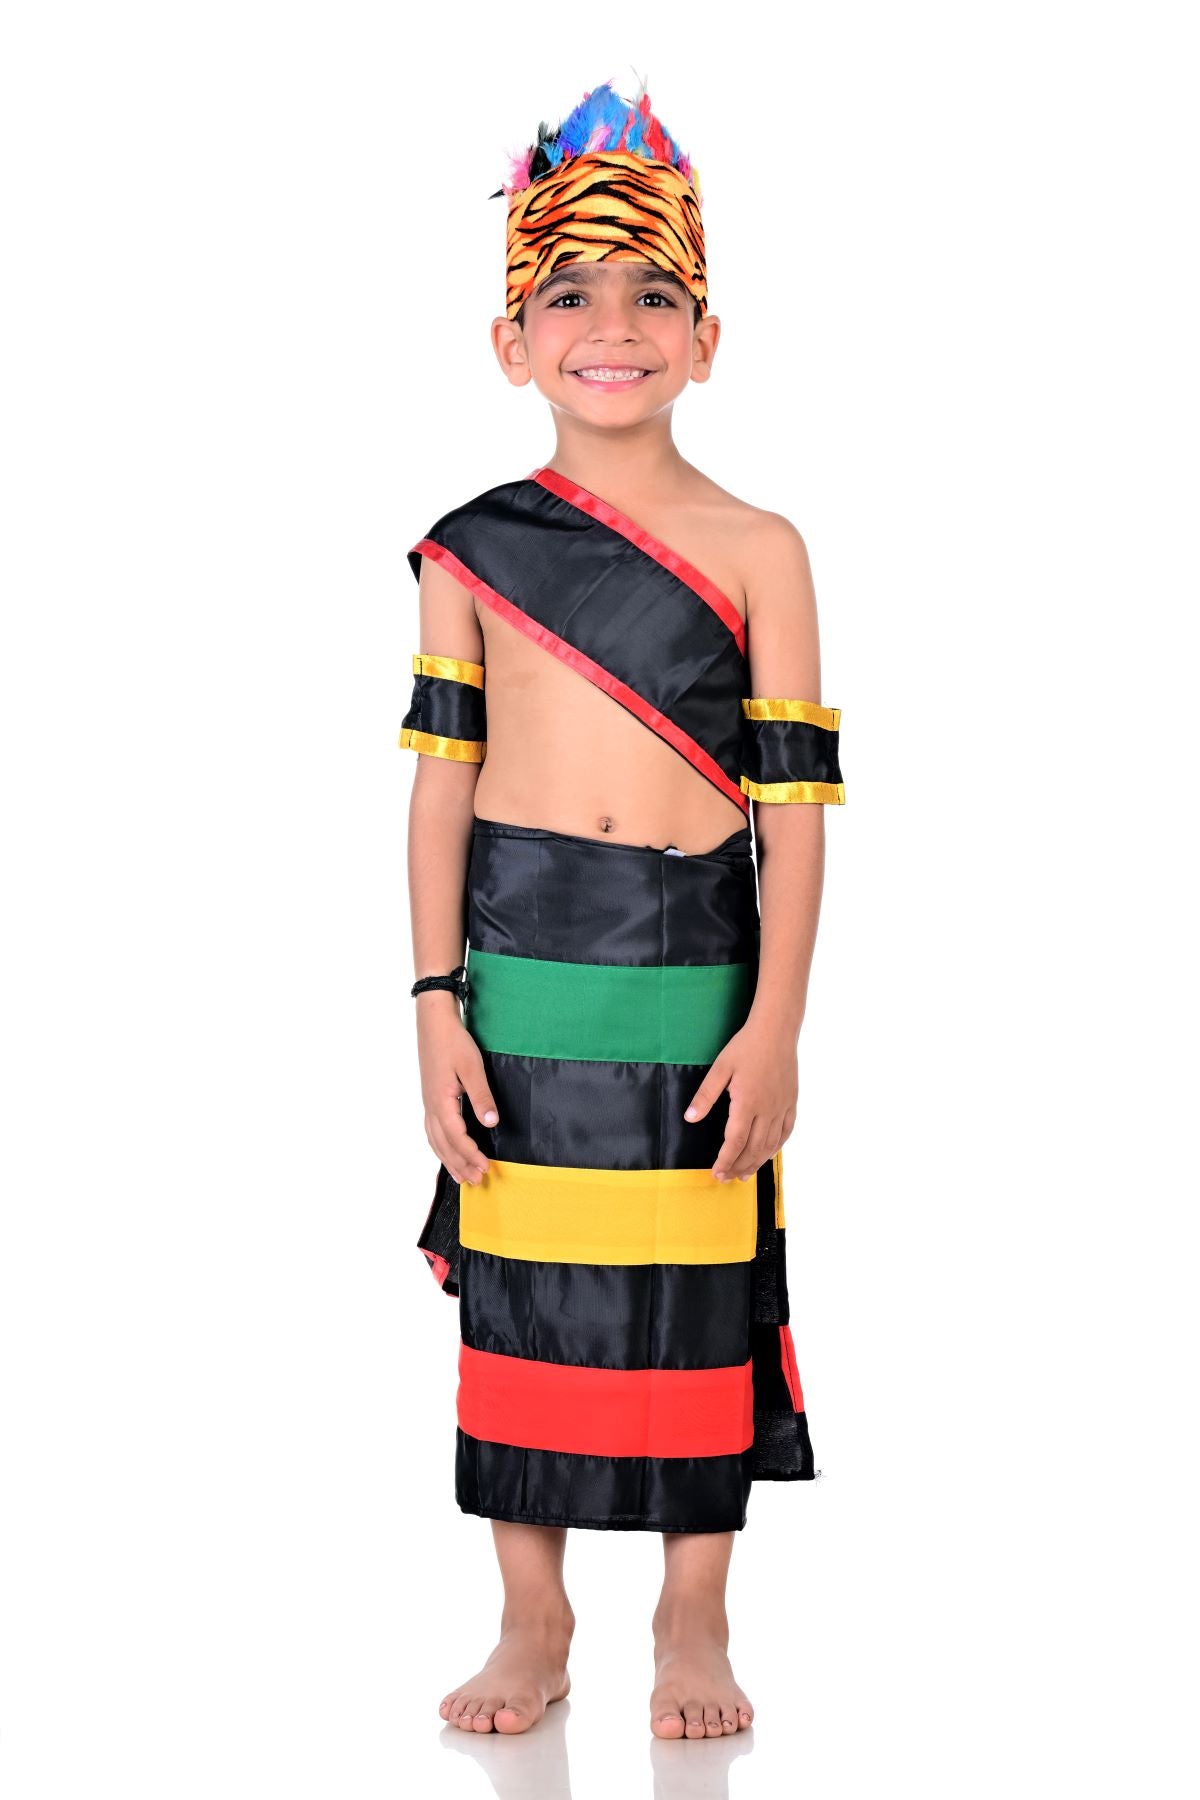 Kids in Kuki attire | Kuki, Indian aesthetic, Traditional dresses designs